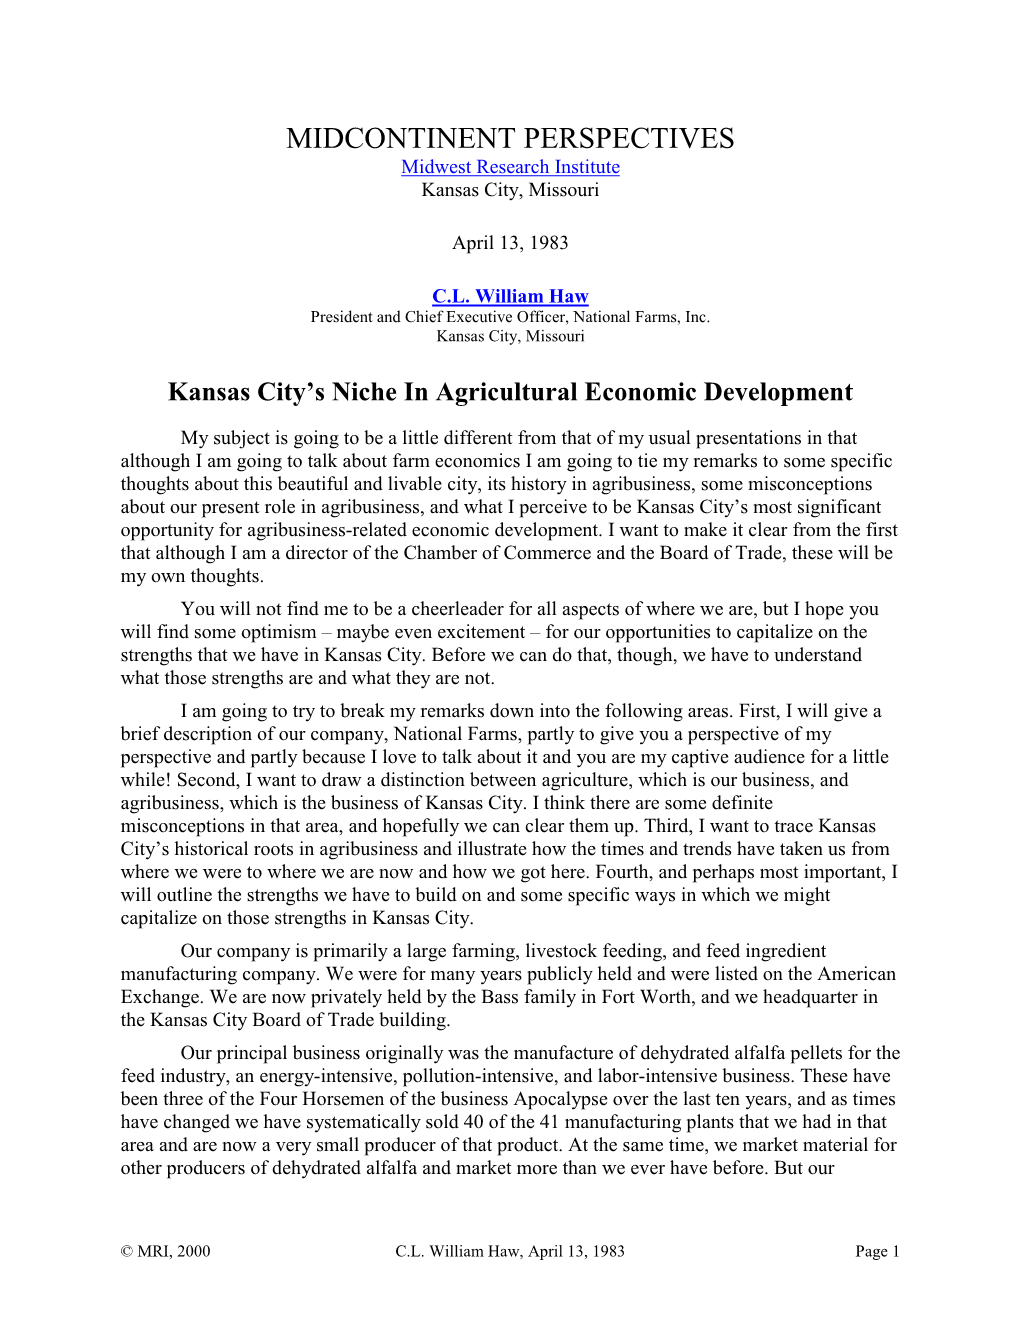 Kansas City's Niche in Agricultural Economic Development